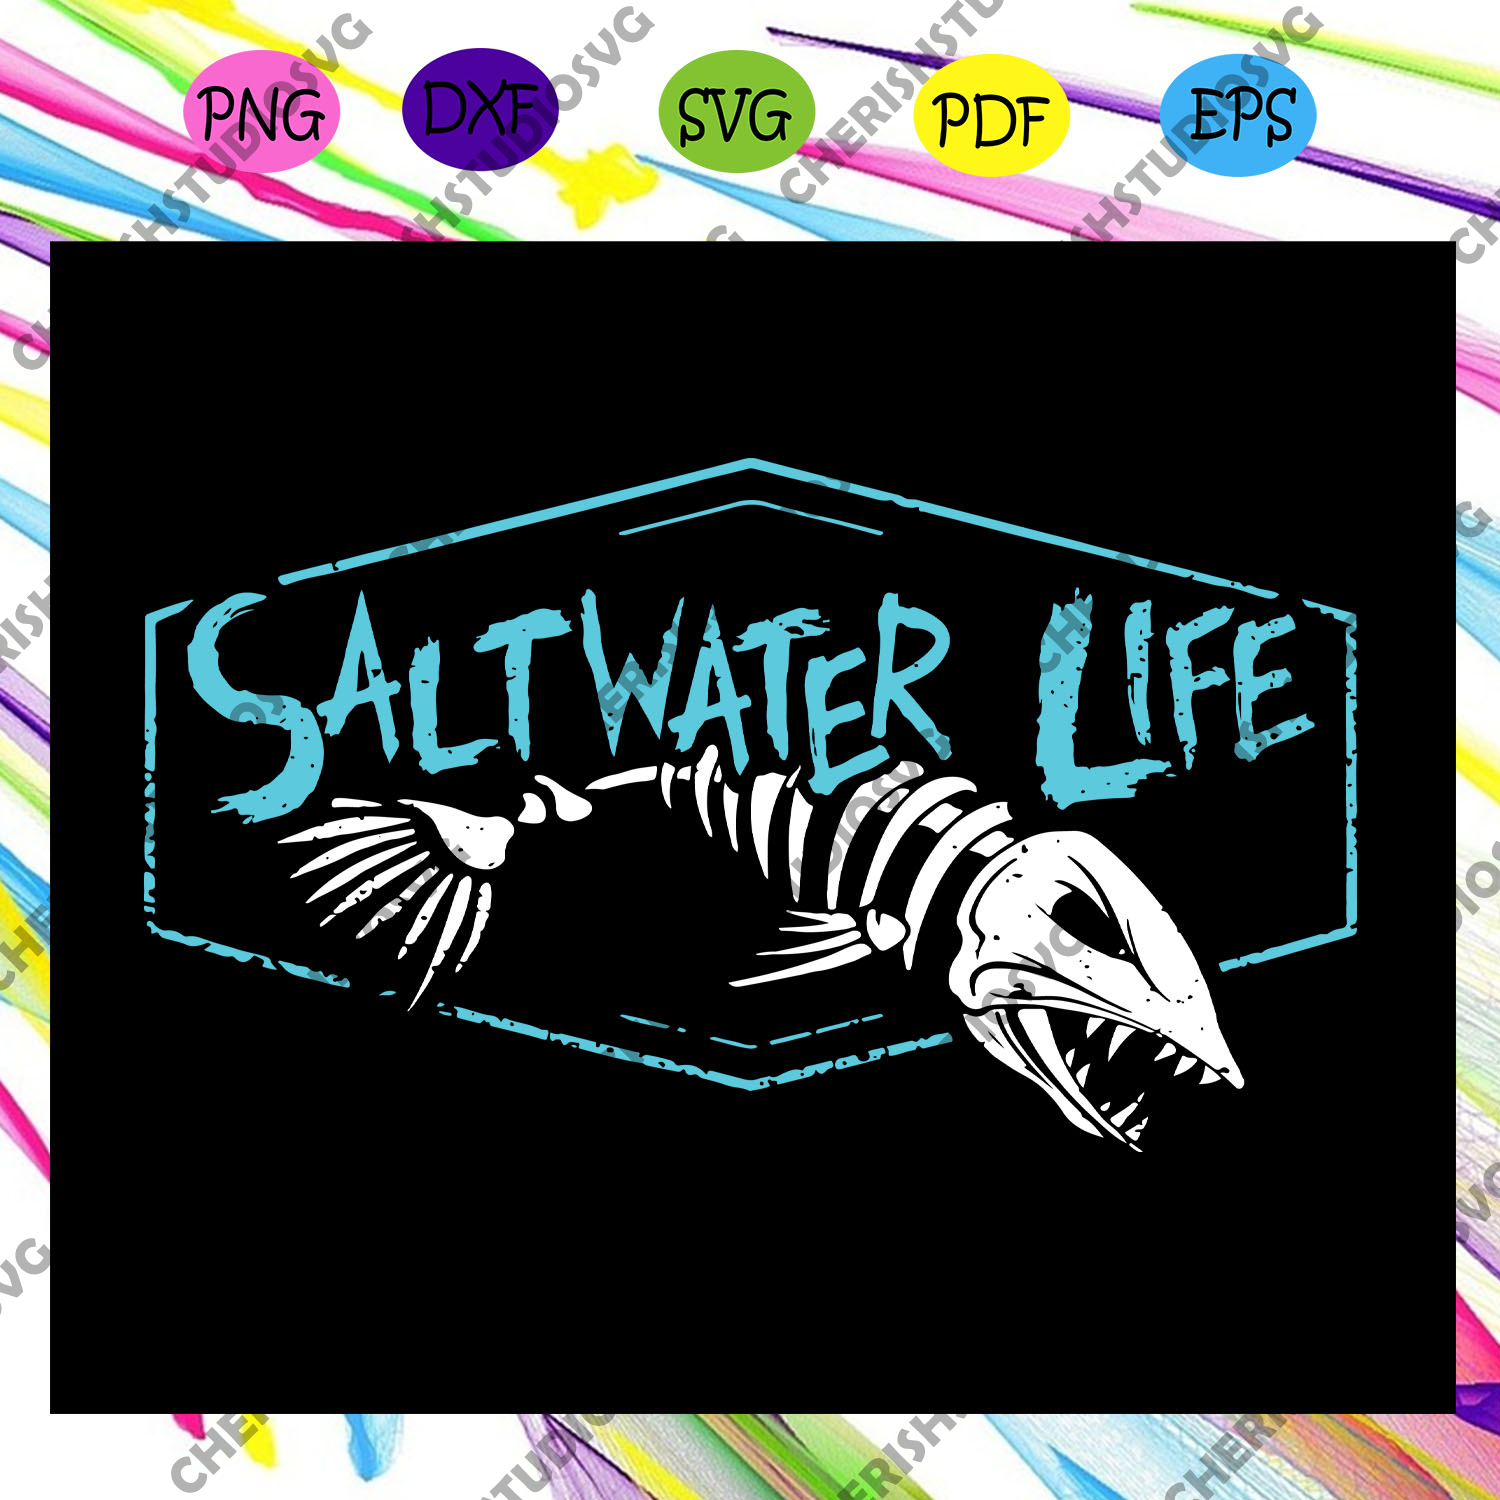 Download Saltwater Life Svg Saltwater Svg Fishing Svg Fishing Gift Svg Fish Cherishsvgstudio